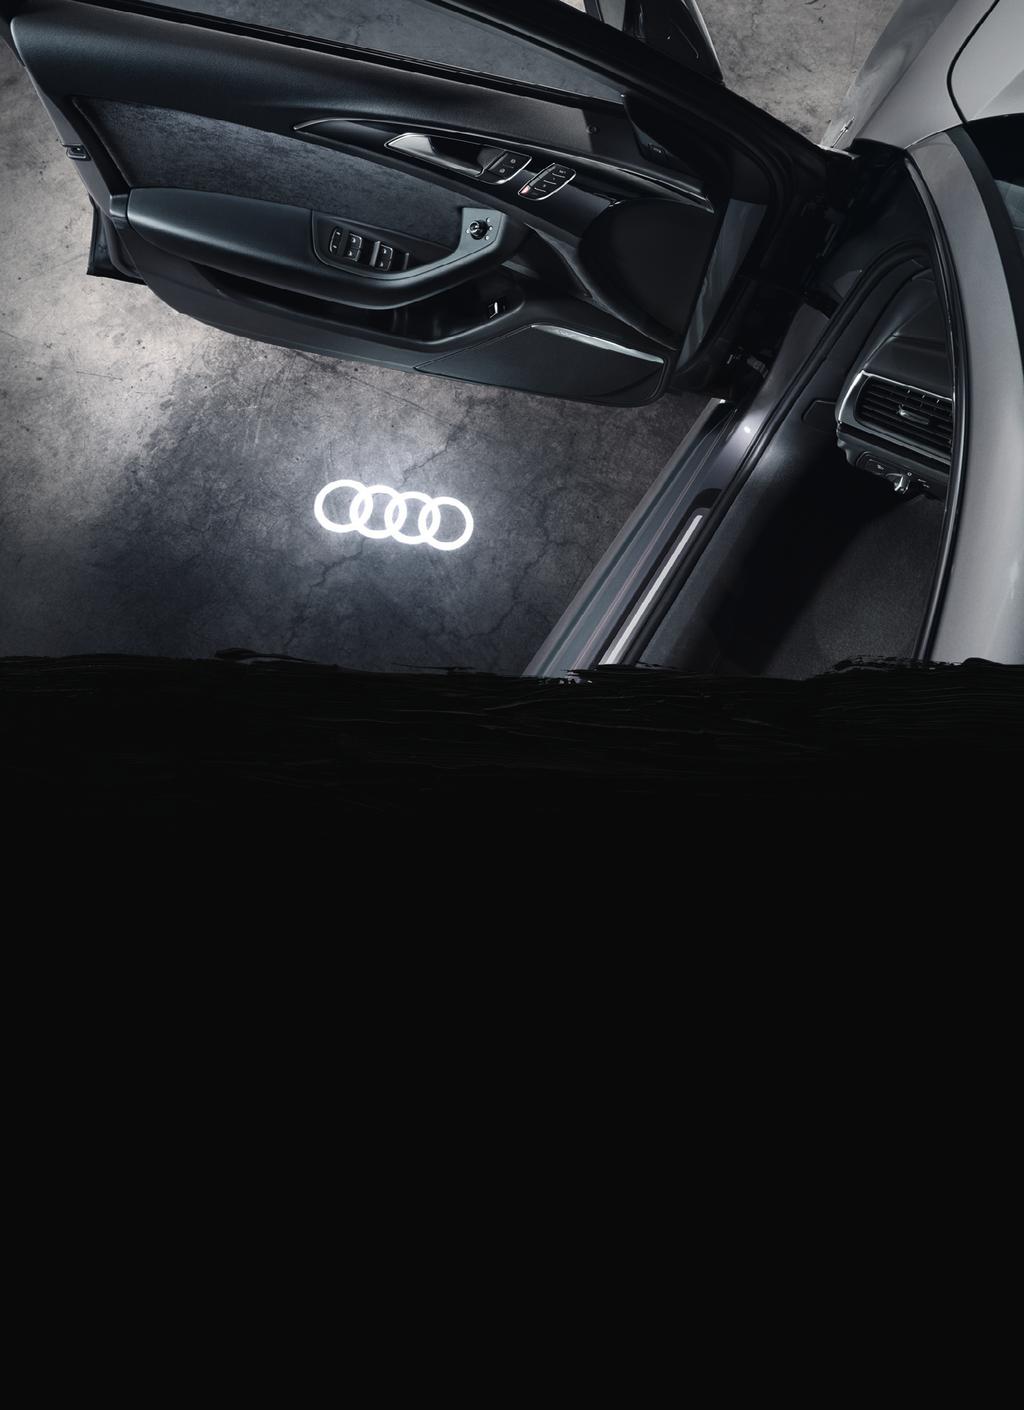 2-Monats-Vorteilsleasing-Angebot 1 z.b. Audi A6 Avant Black Edition 2.0 TDI ultra, S tronic, 7-stufig * 10 kw (190 PS), inkl.